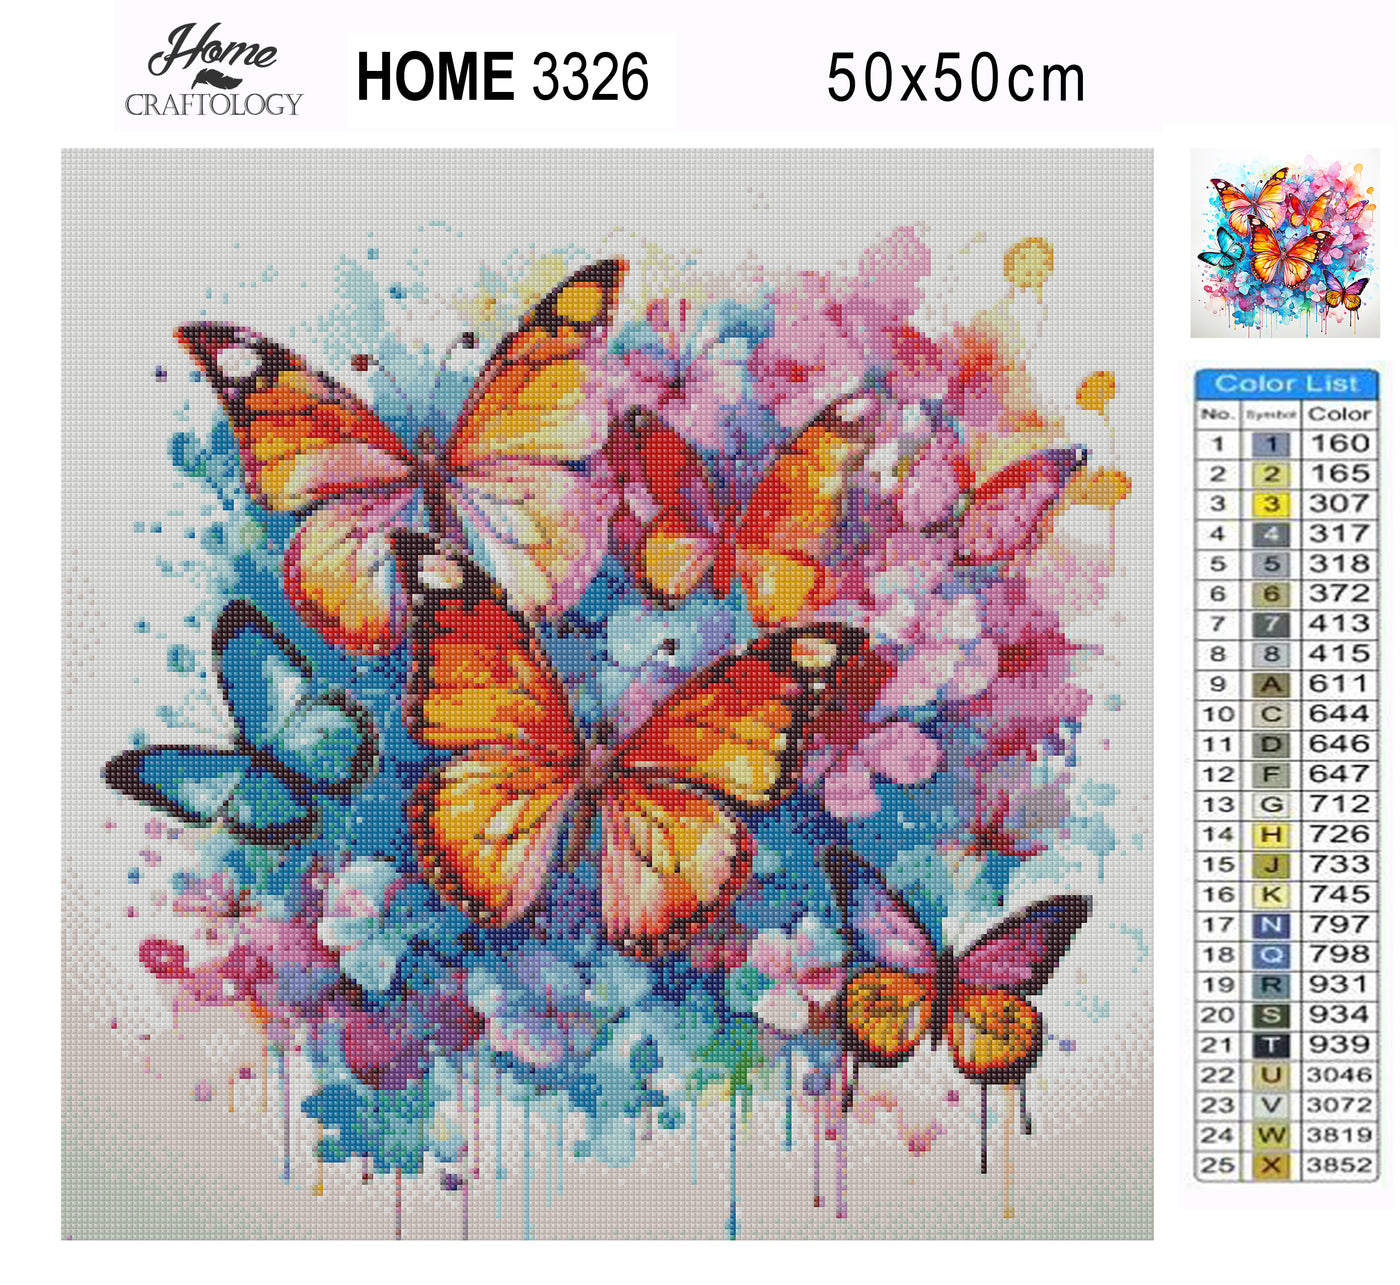 New! Butterflies Watercolor Painting - Premium Diamond Painting Kit